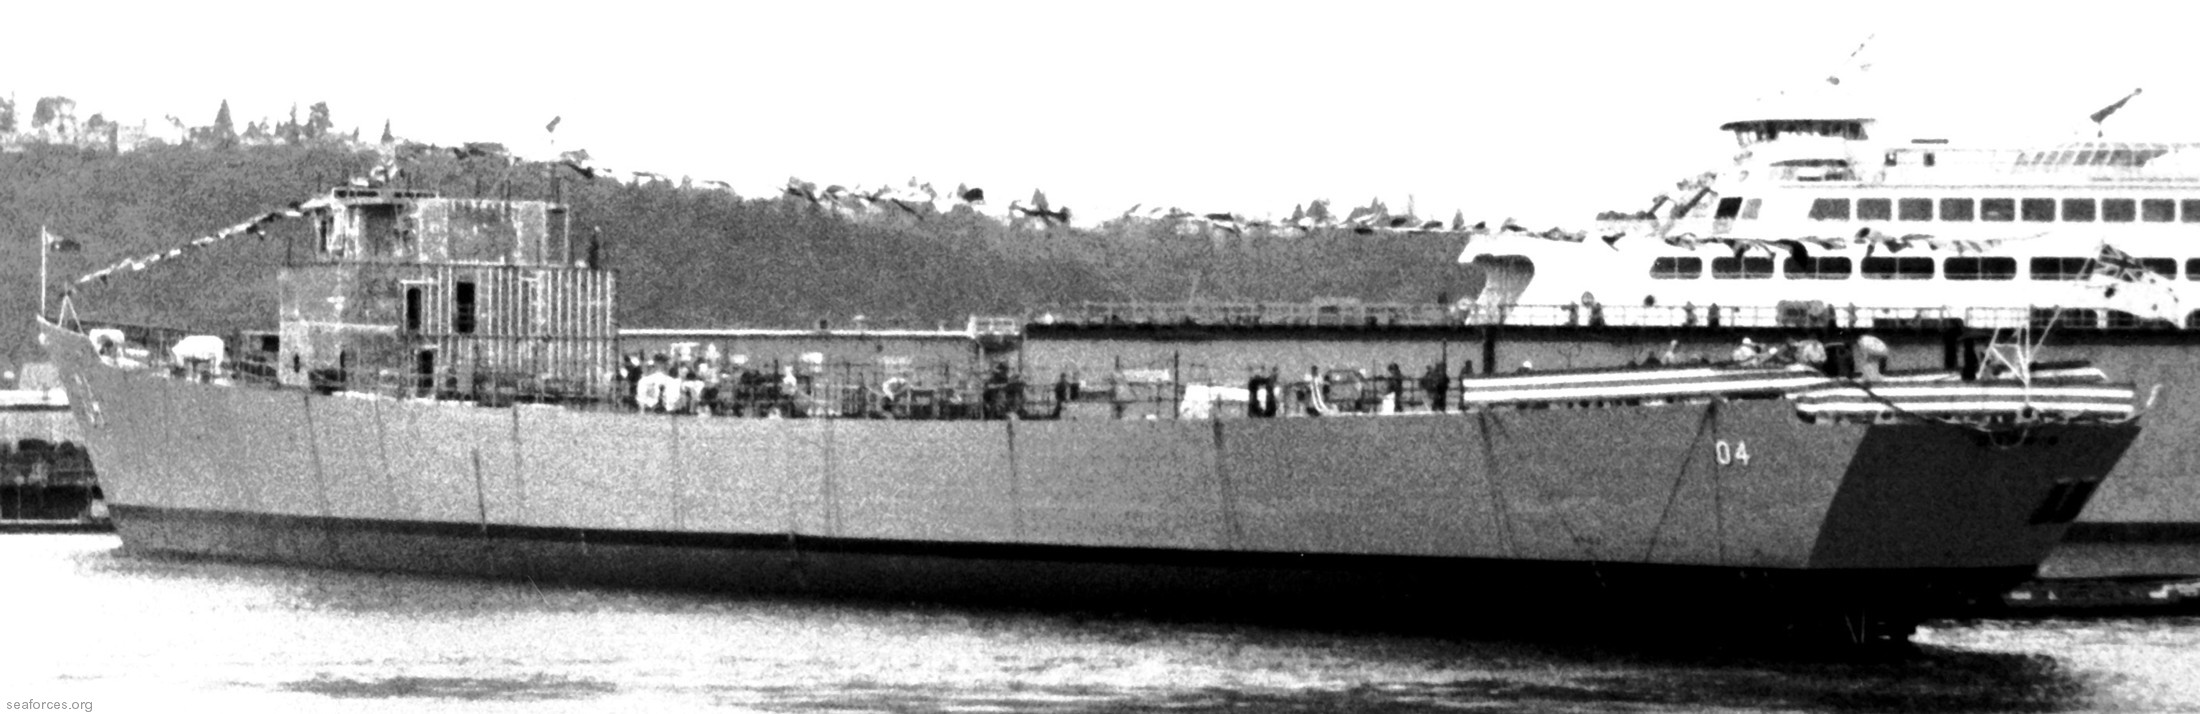 ffg-04 hmas darwin adelaide class frigate royal australian navy 1982 todd pacific shipyards seattle